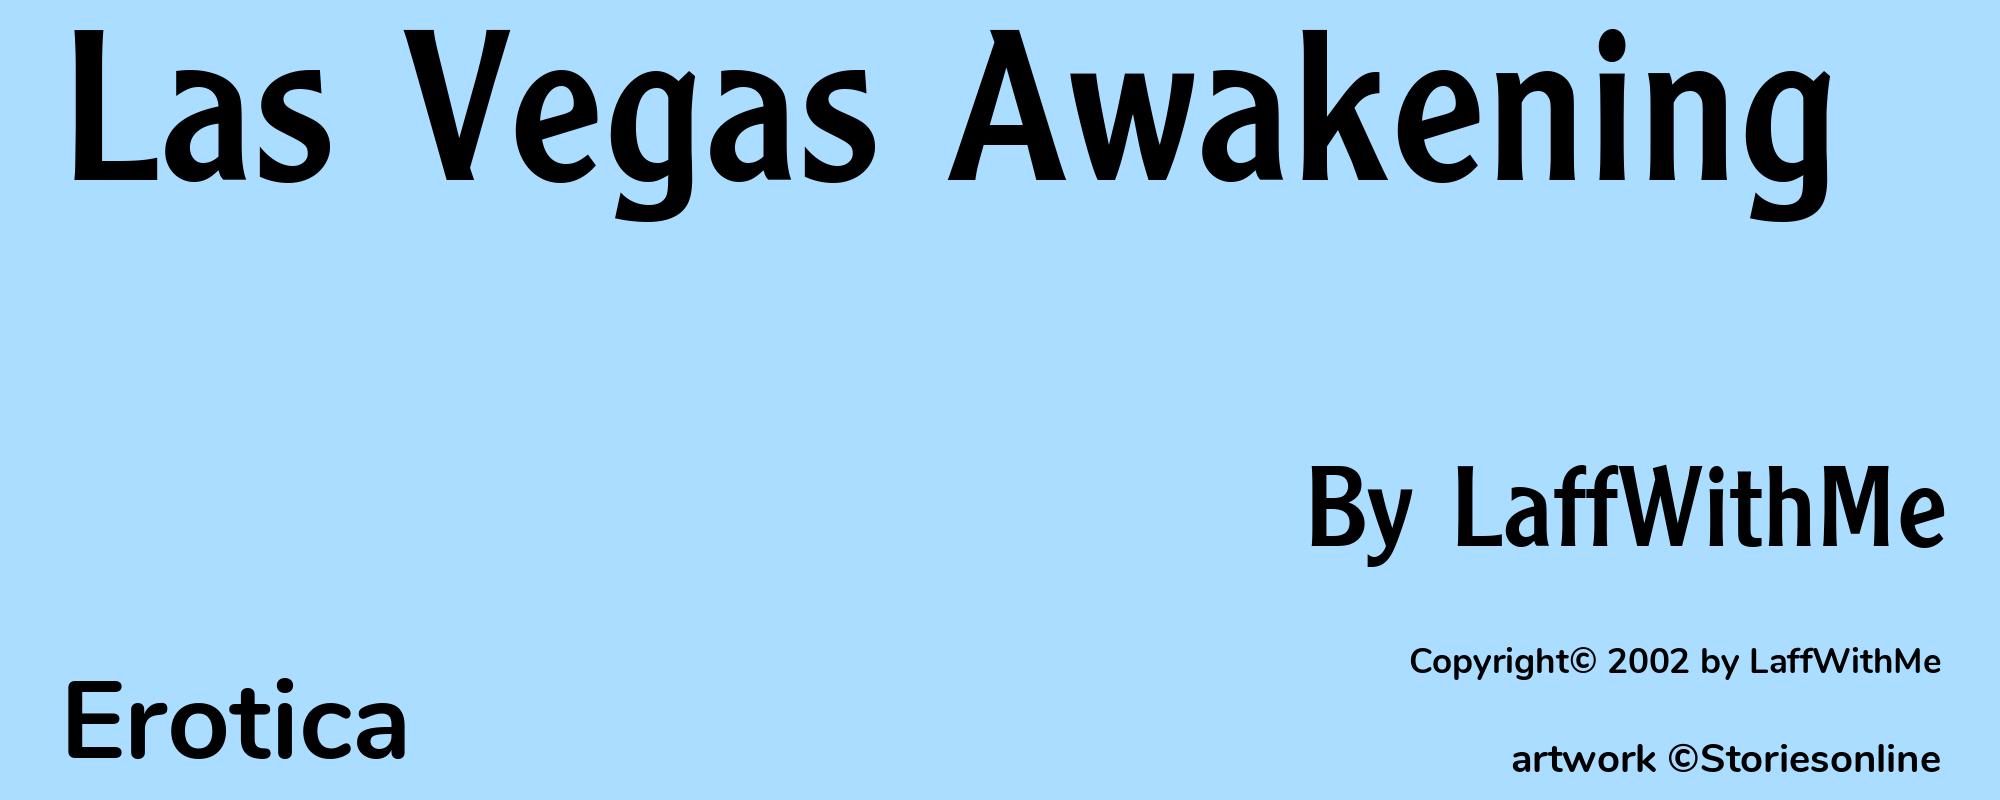 Las Vegas Awakening - Cover